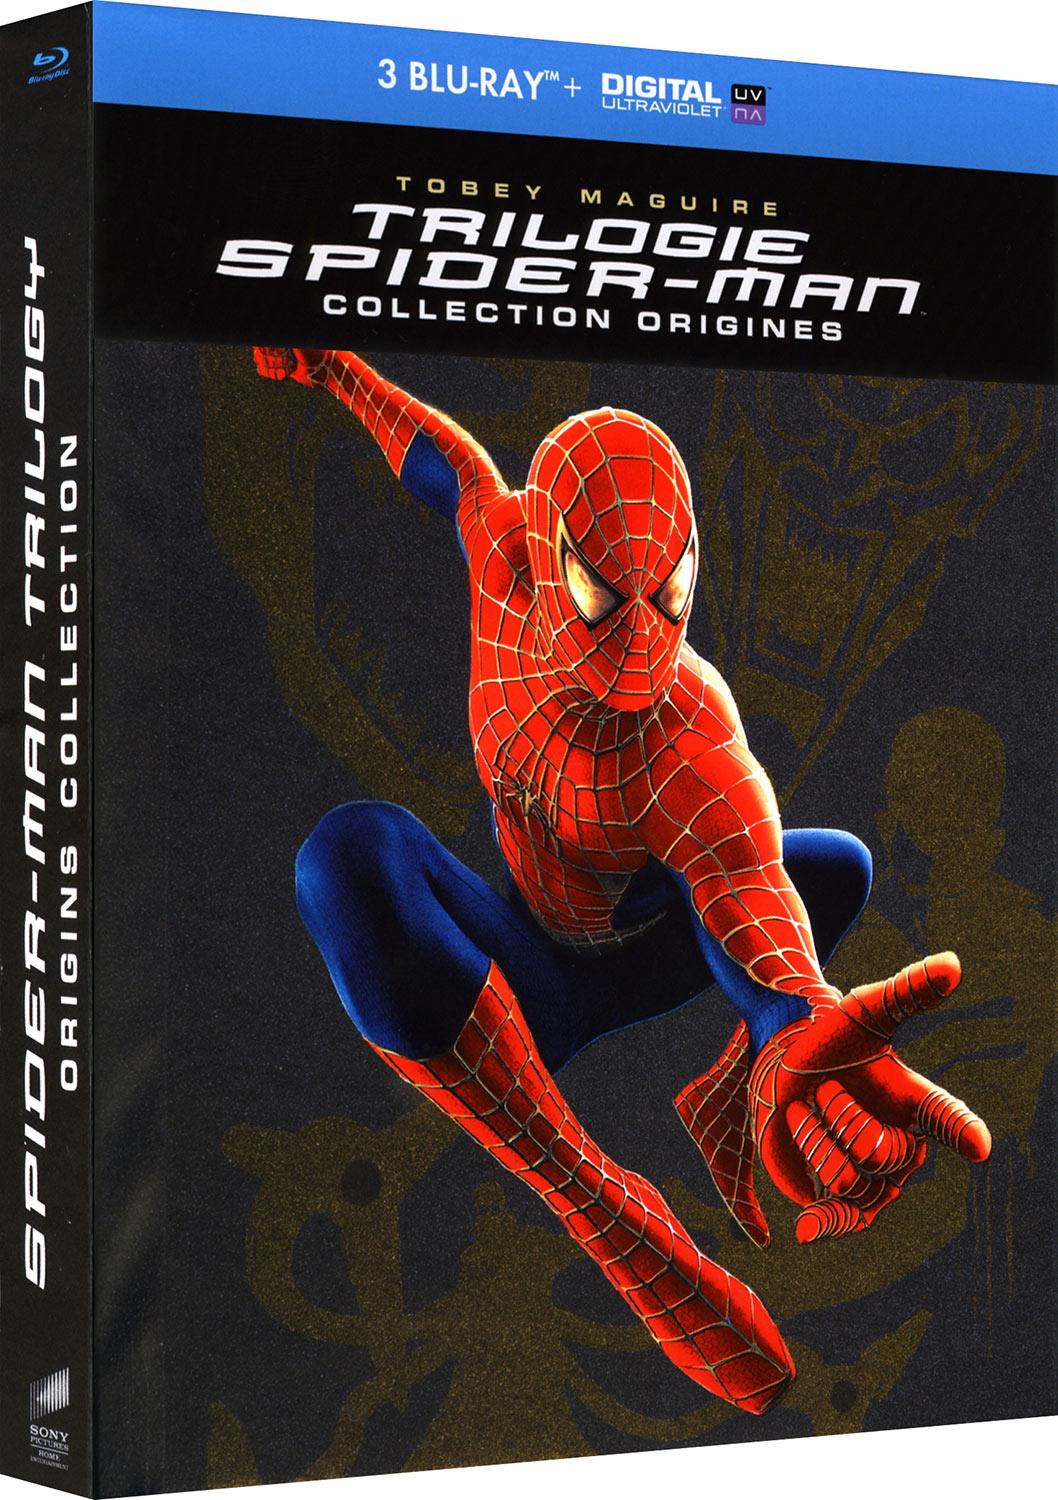 Trilogie Spider-Man - Collection Origines - 4 Blu-ray + Digital UV